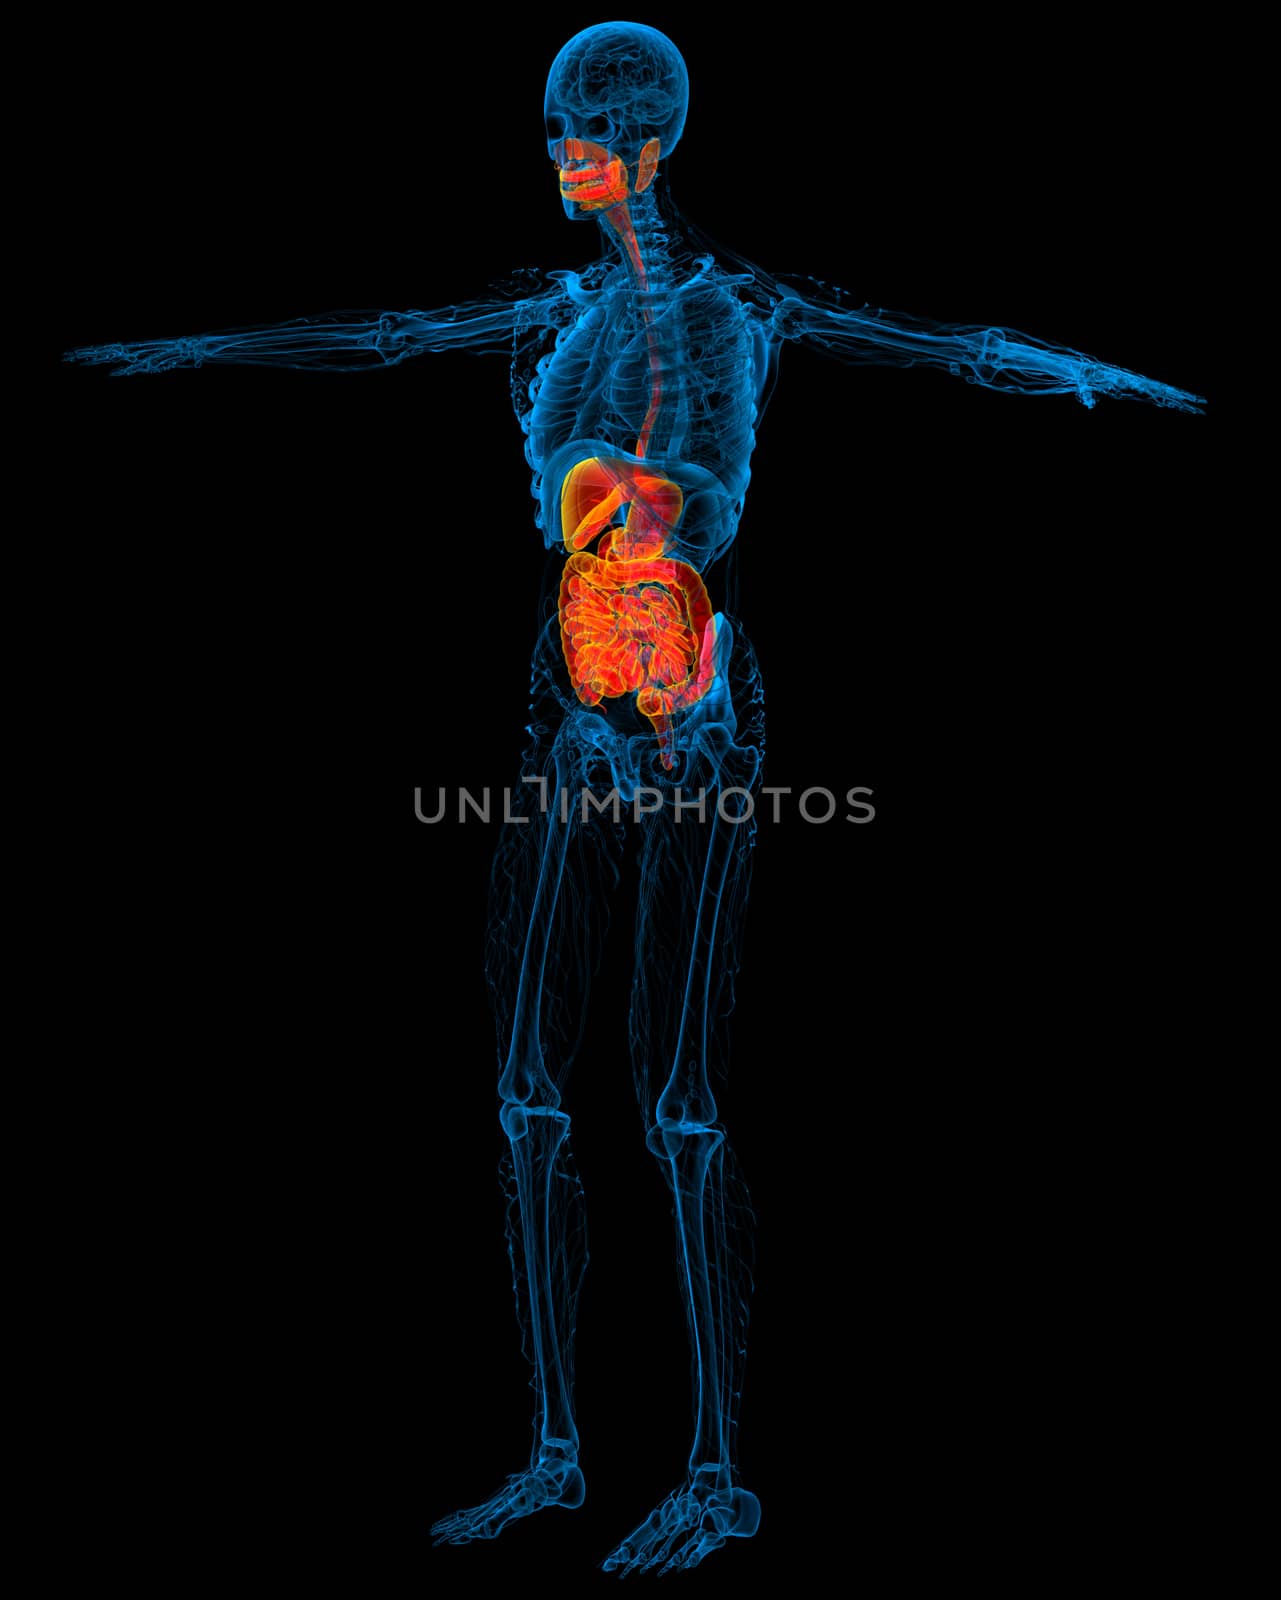 3d render medical illustration of the human digestive system - side view